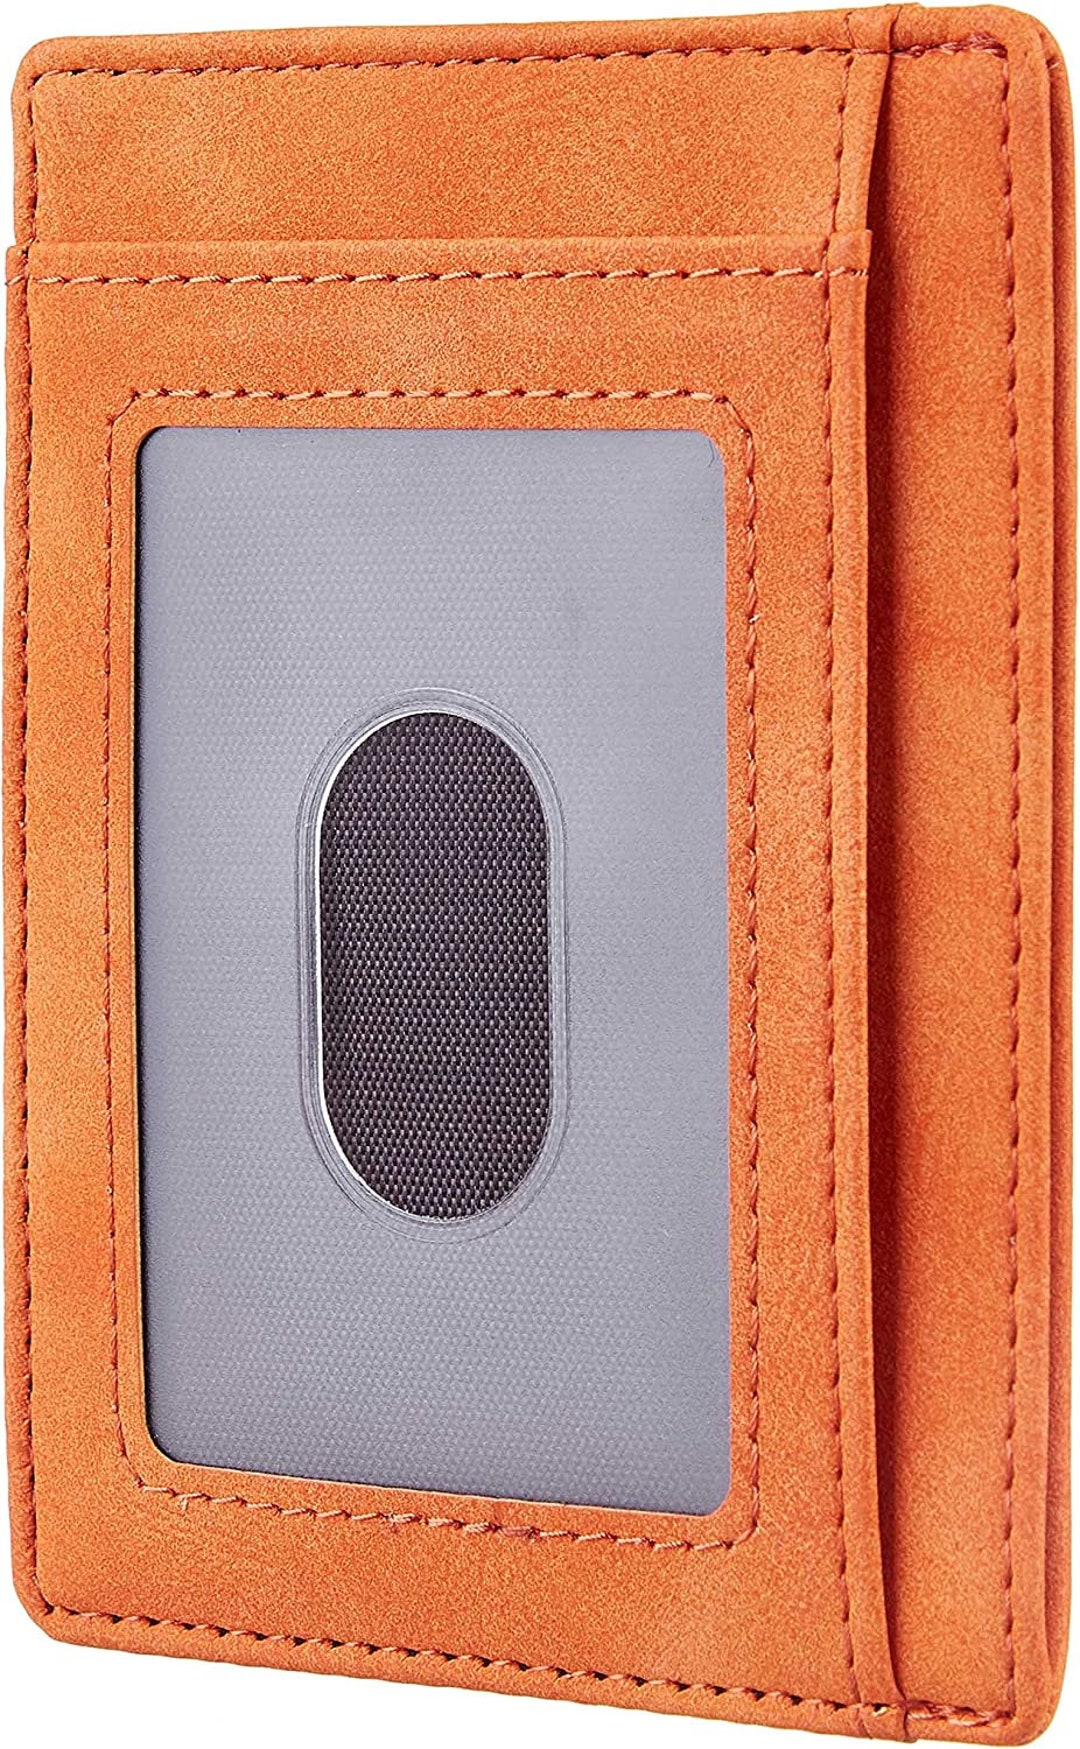  Alpha Wallet - Ultra Slim, Minimalist Wallet, RFID Blocking, 12 Card Capacity